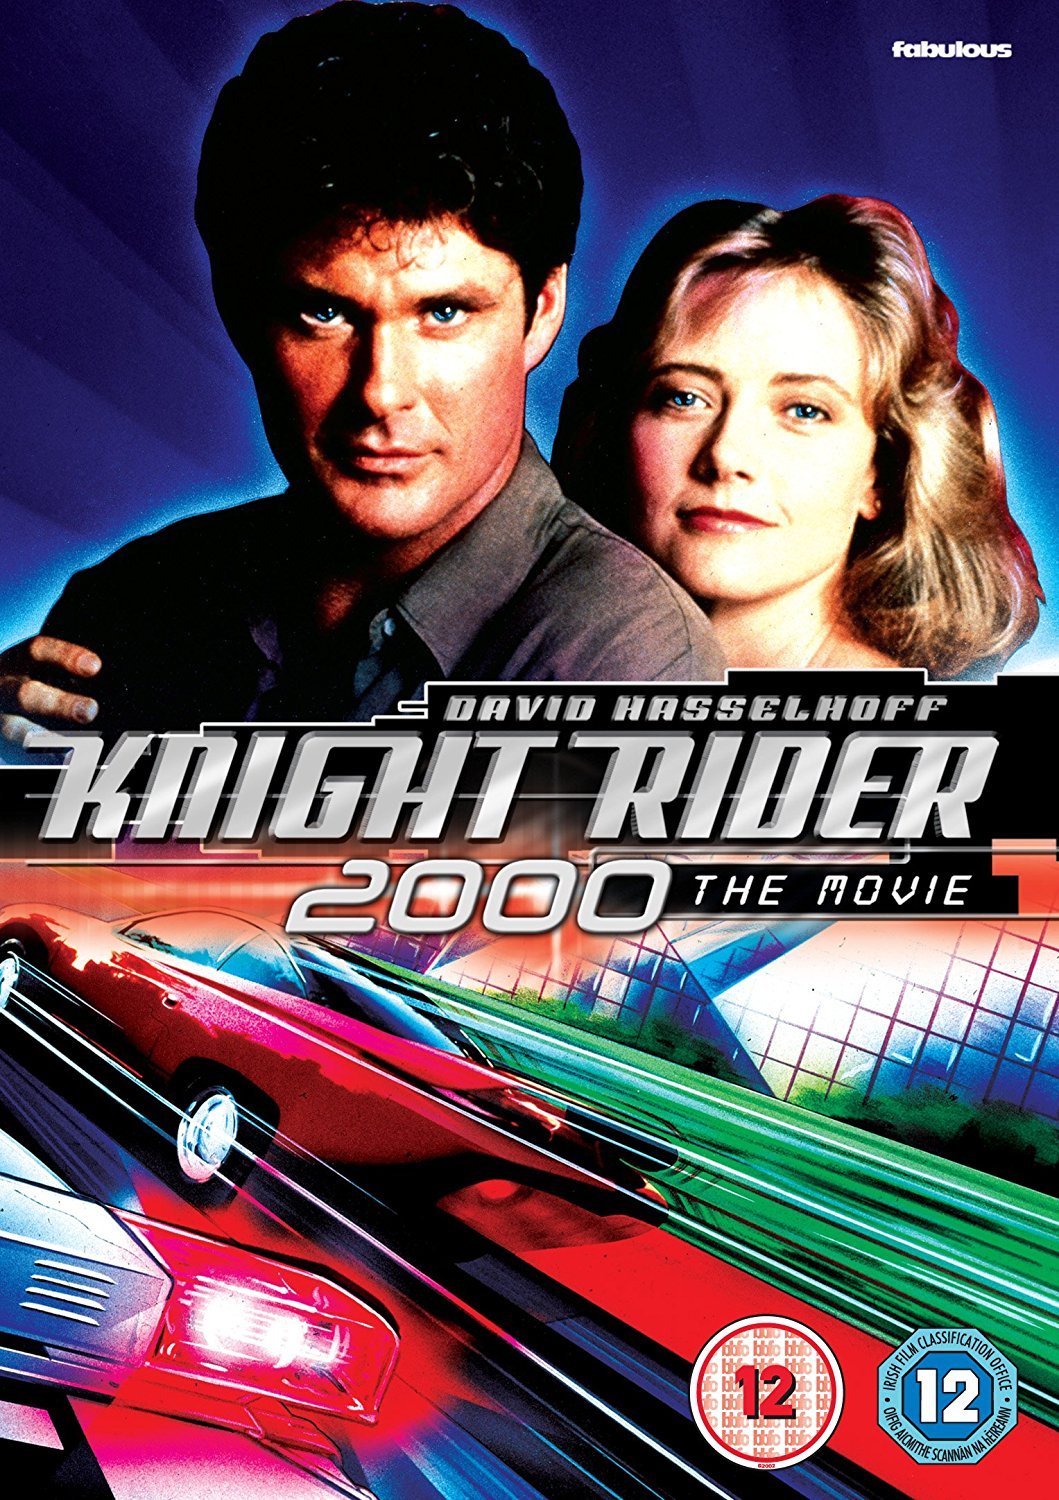 watch knight rider 2000